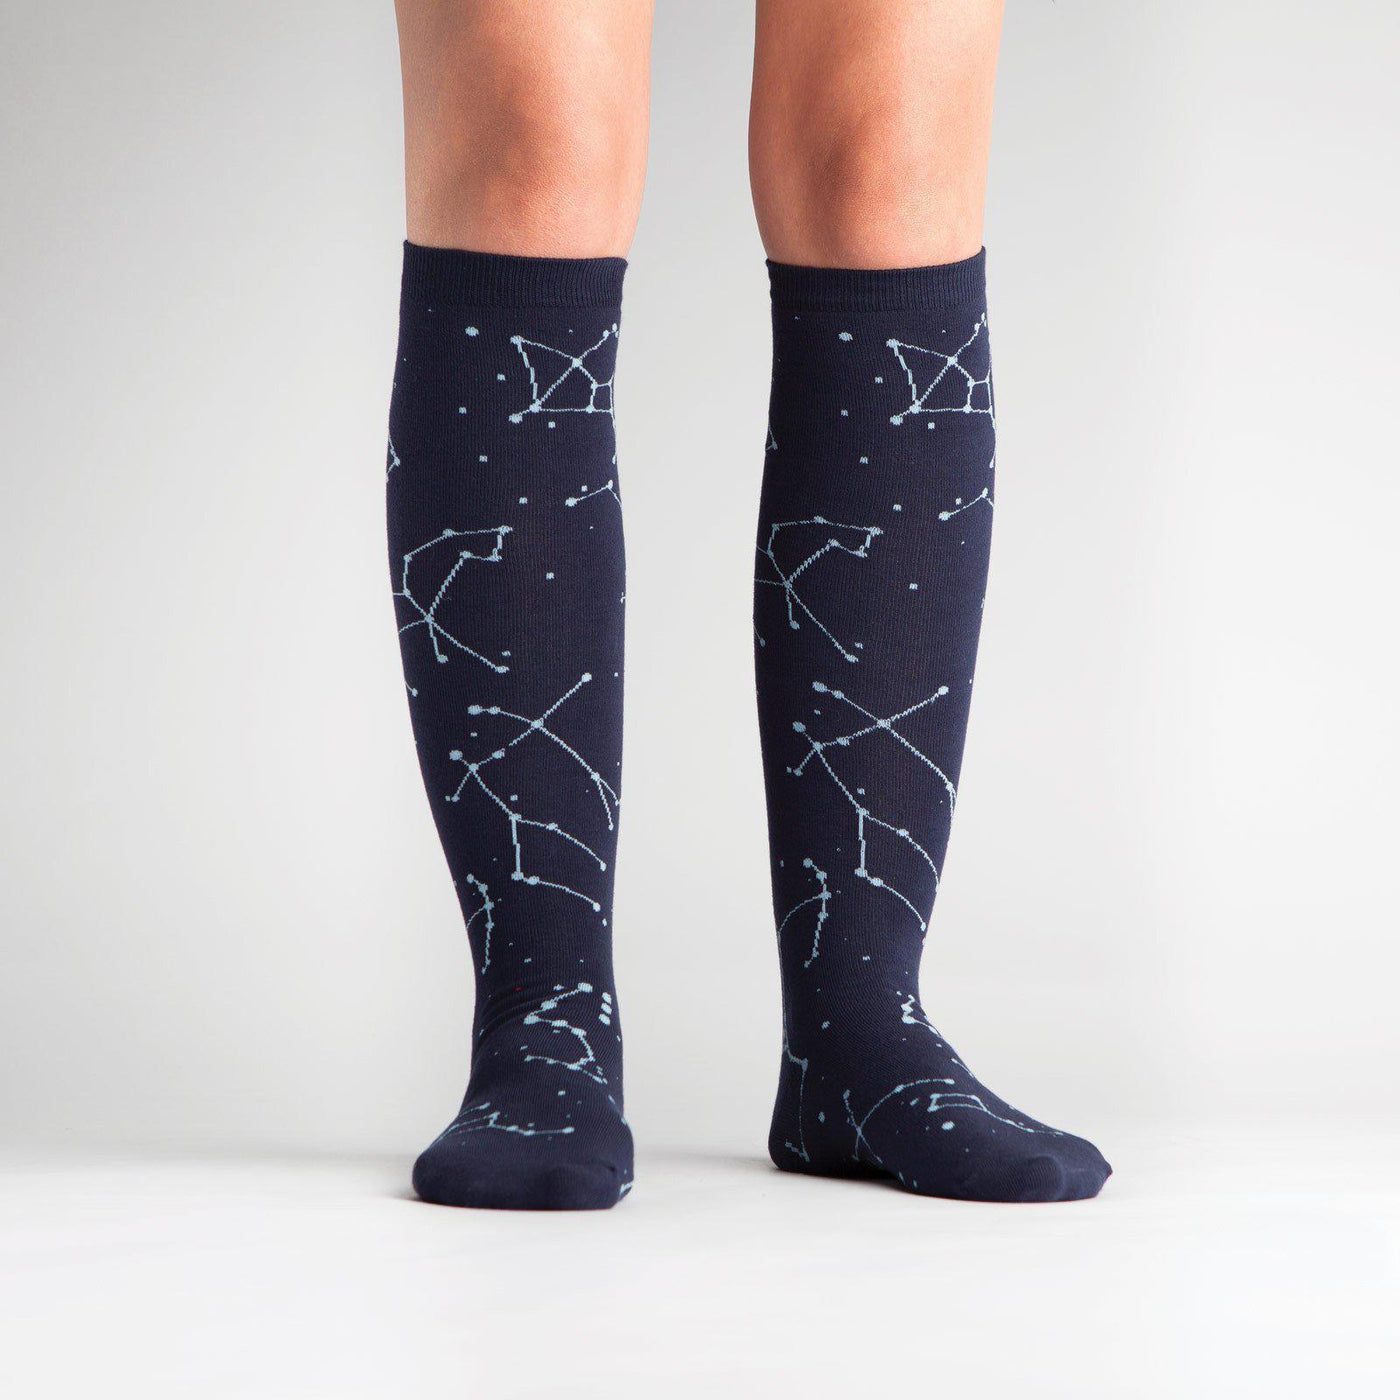 Sock It To Me - Constellation Knee High Socks | Women's - Knock Your Socks Off